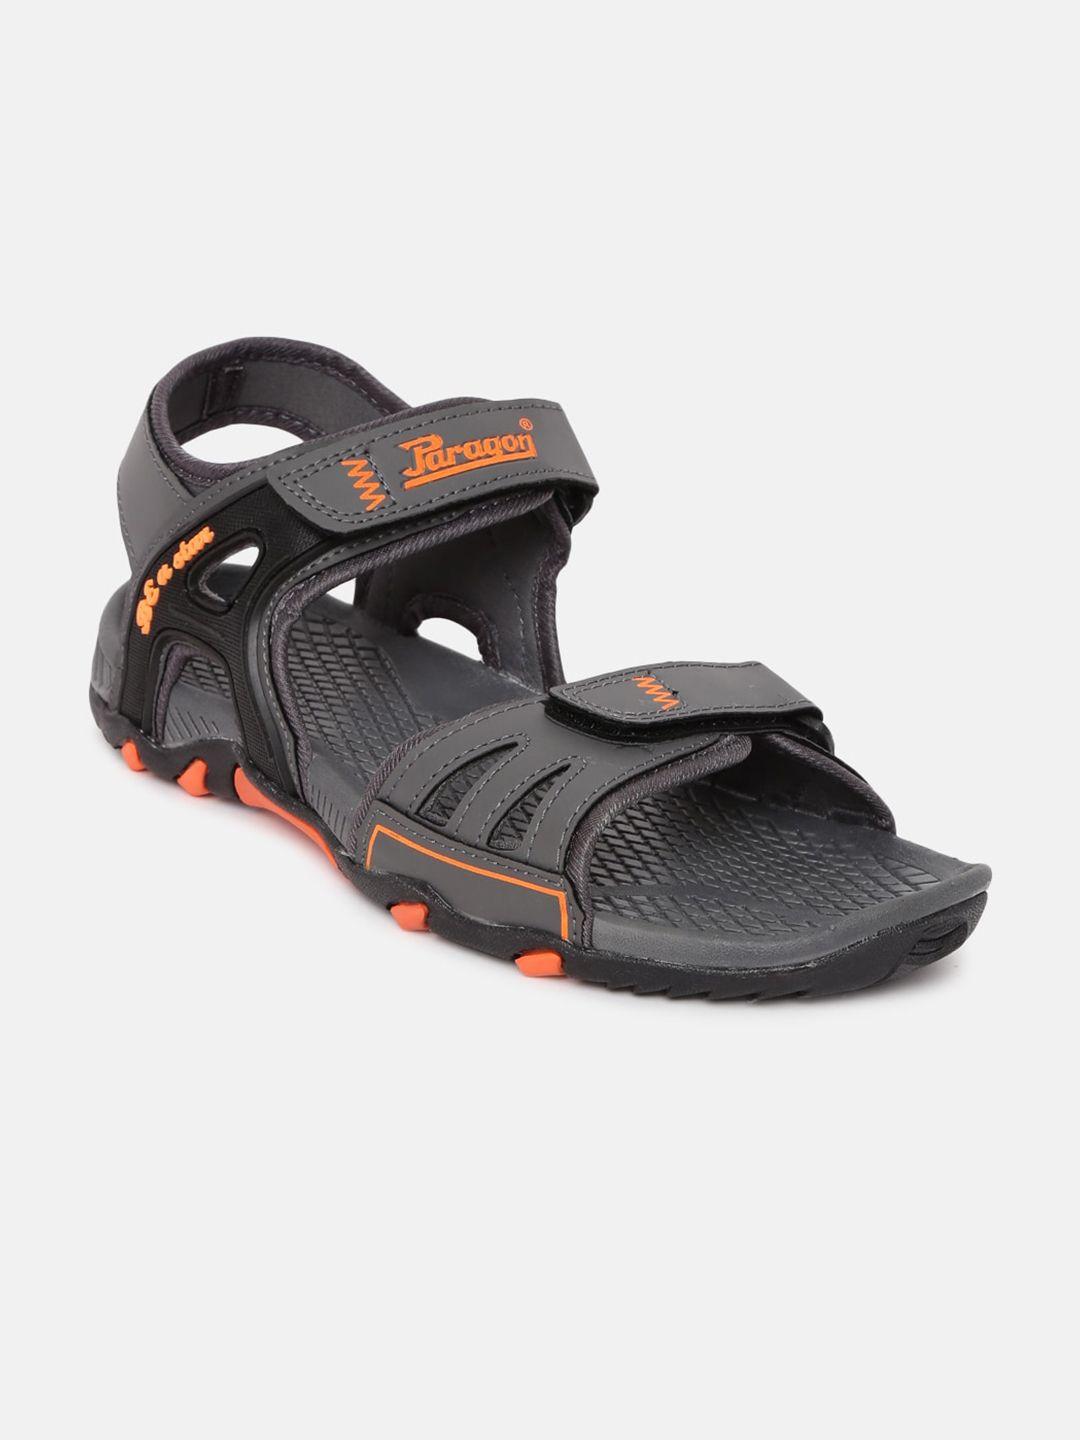 paragon-men-grey-&-orange-sports-sandals